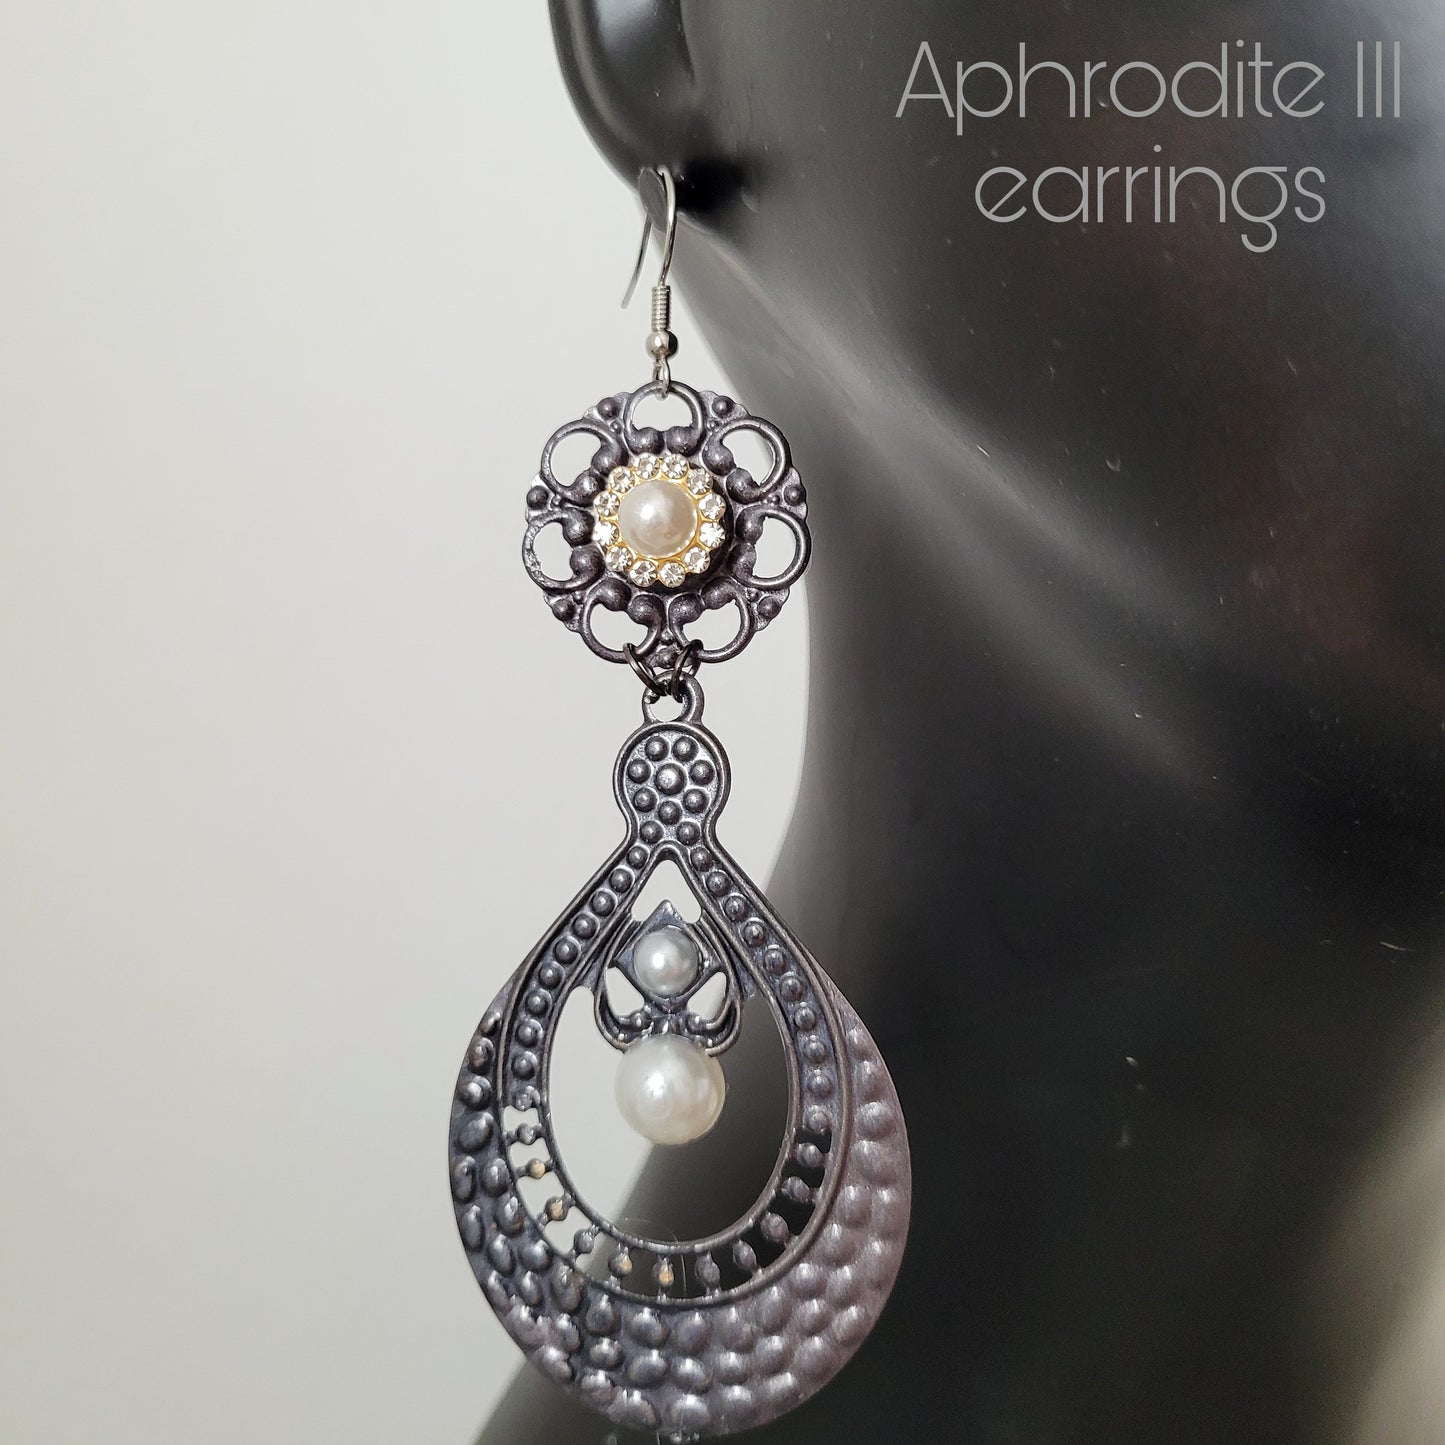 Deusa ex Machina collection: The Aphrodite earrings